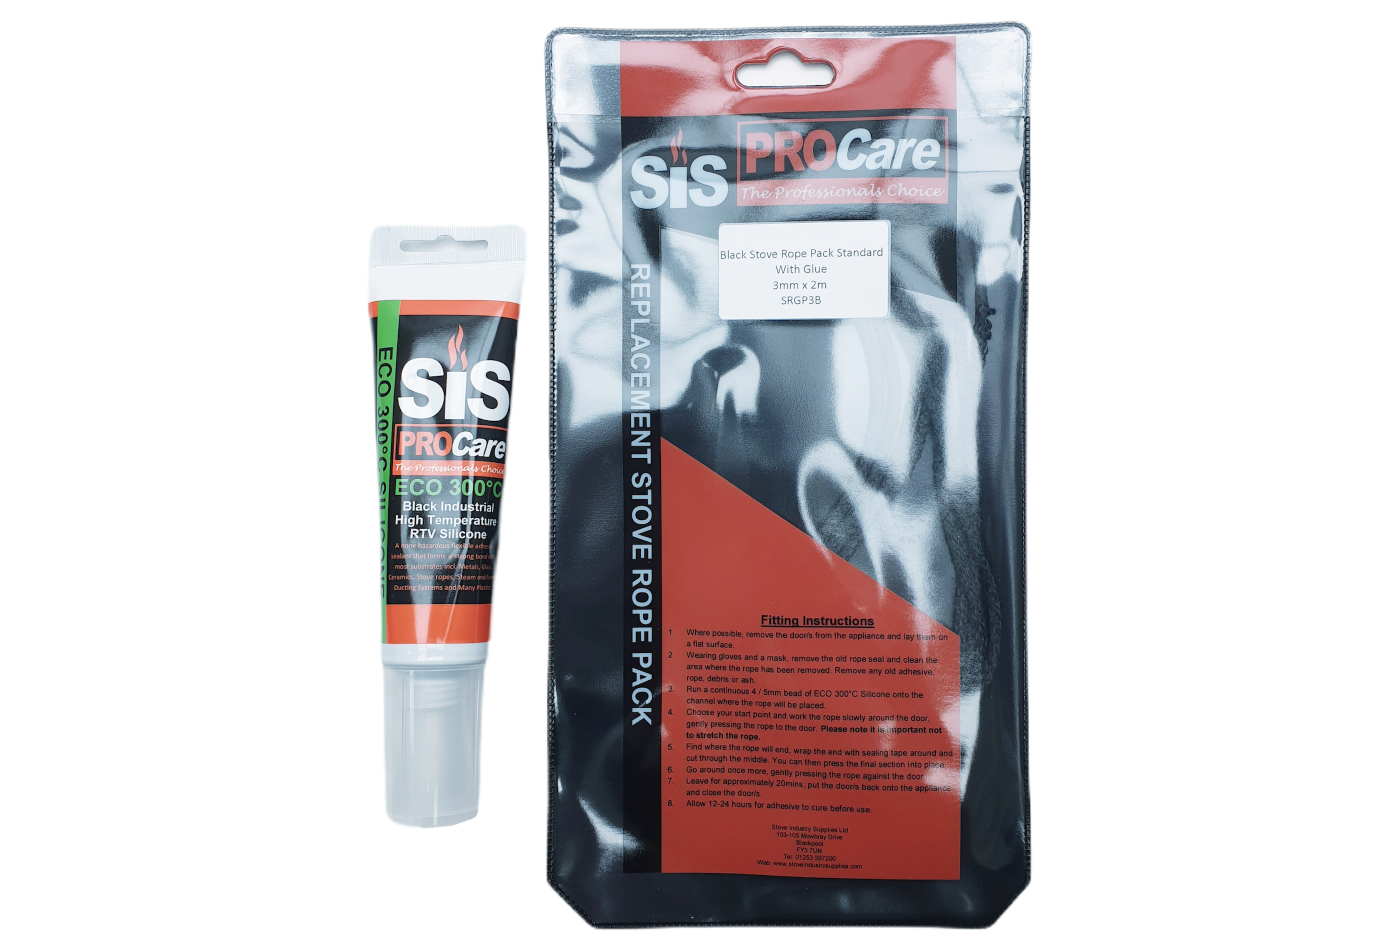 SiS Procare Black 3 milimetre x 2 metre Black Standard Stove Rope & 80 millilitre Rope Glue Pack - product code SRGP3B